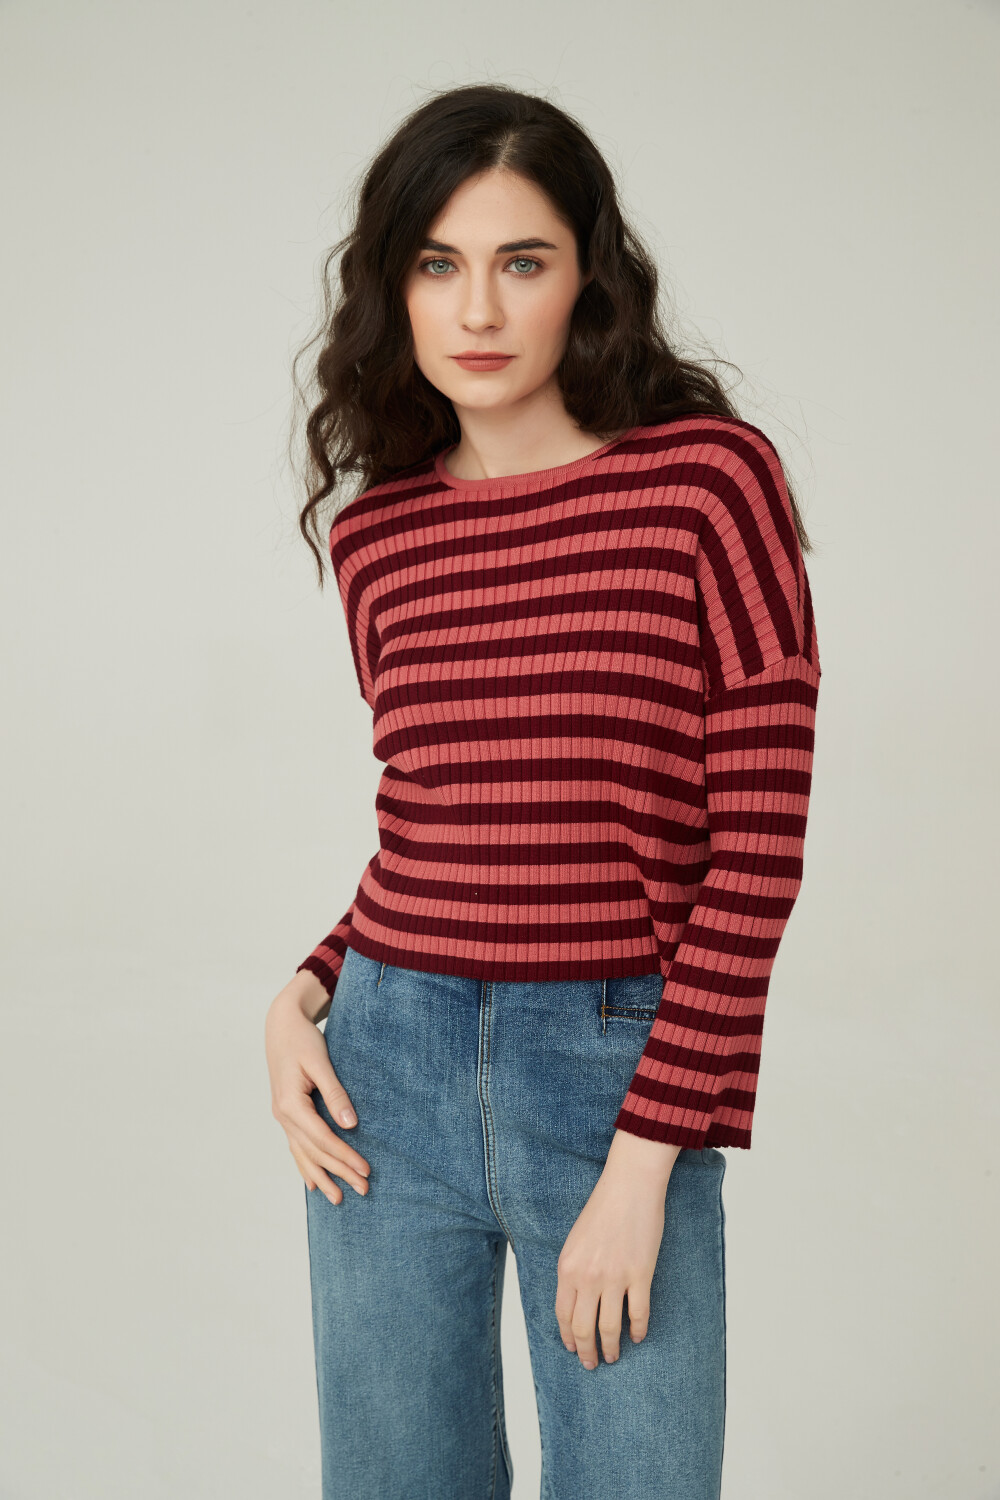 Sweater Zuara Estampado 1